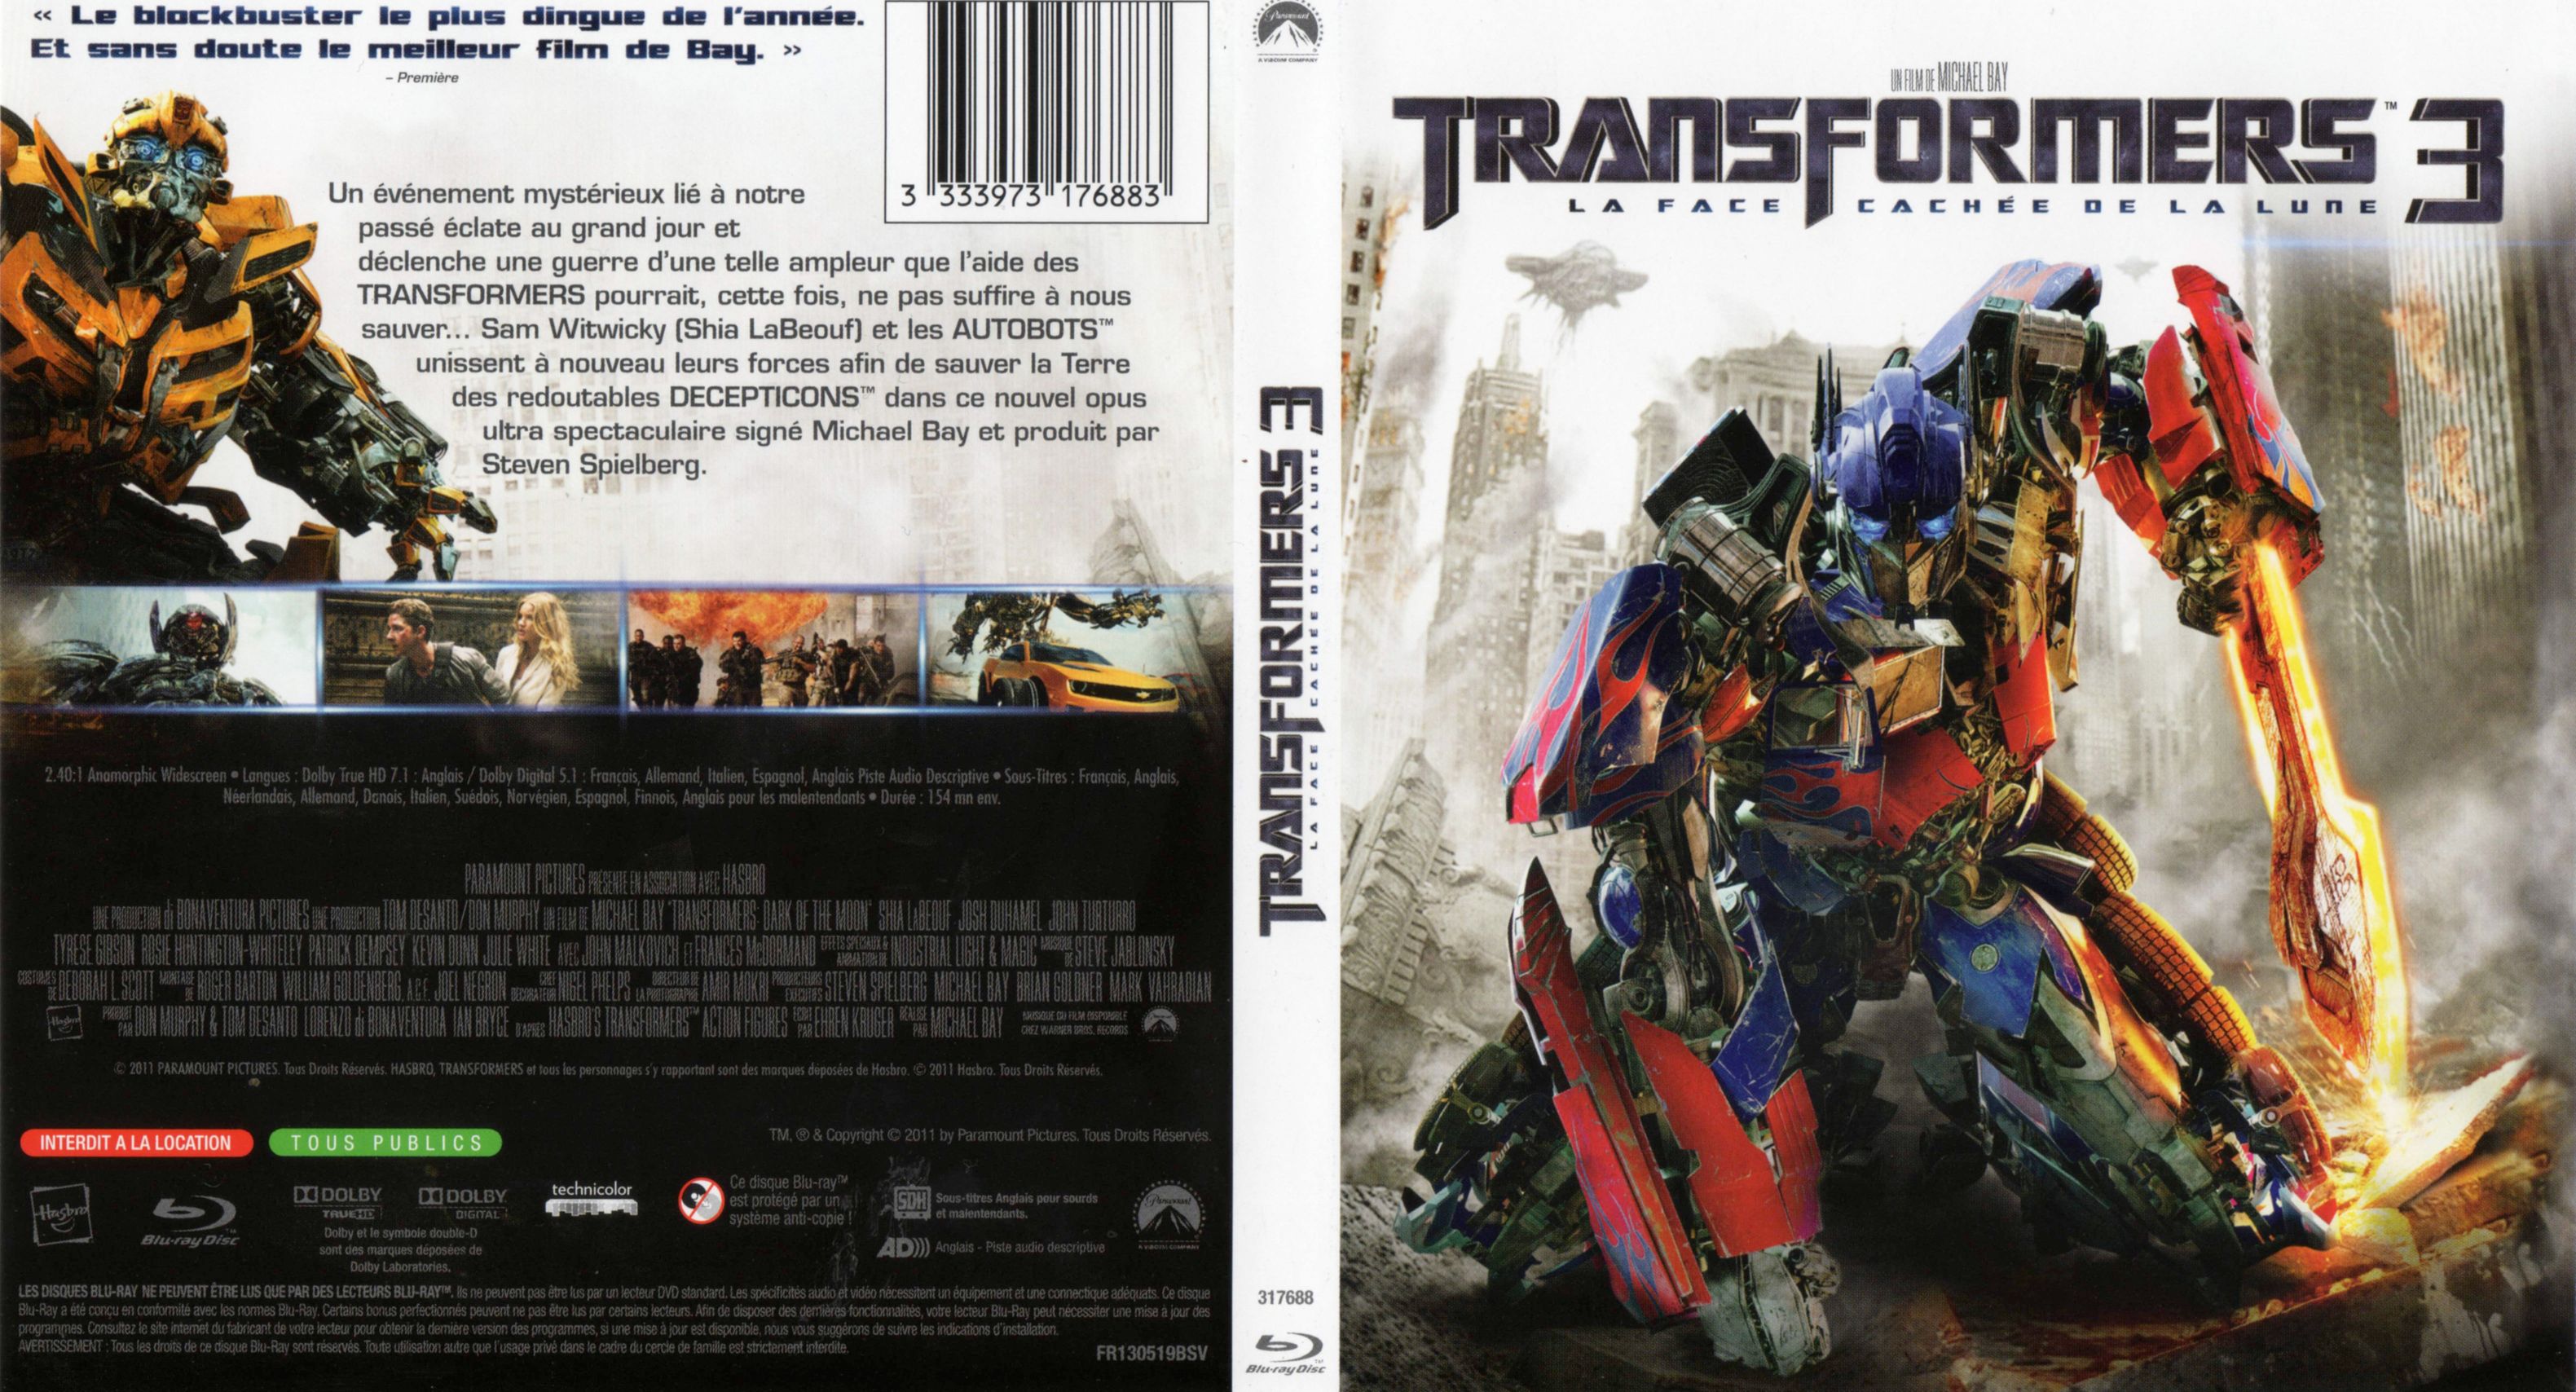 Jaquette DVD Transformers 3 (BLU-RAY)